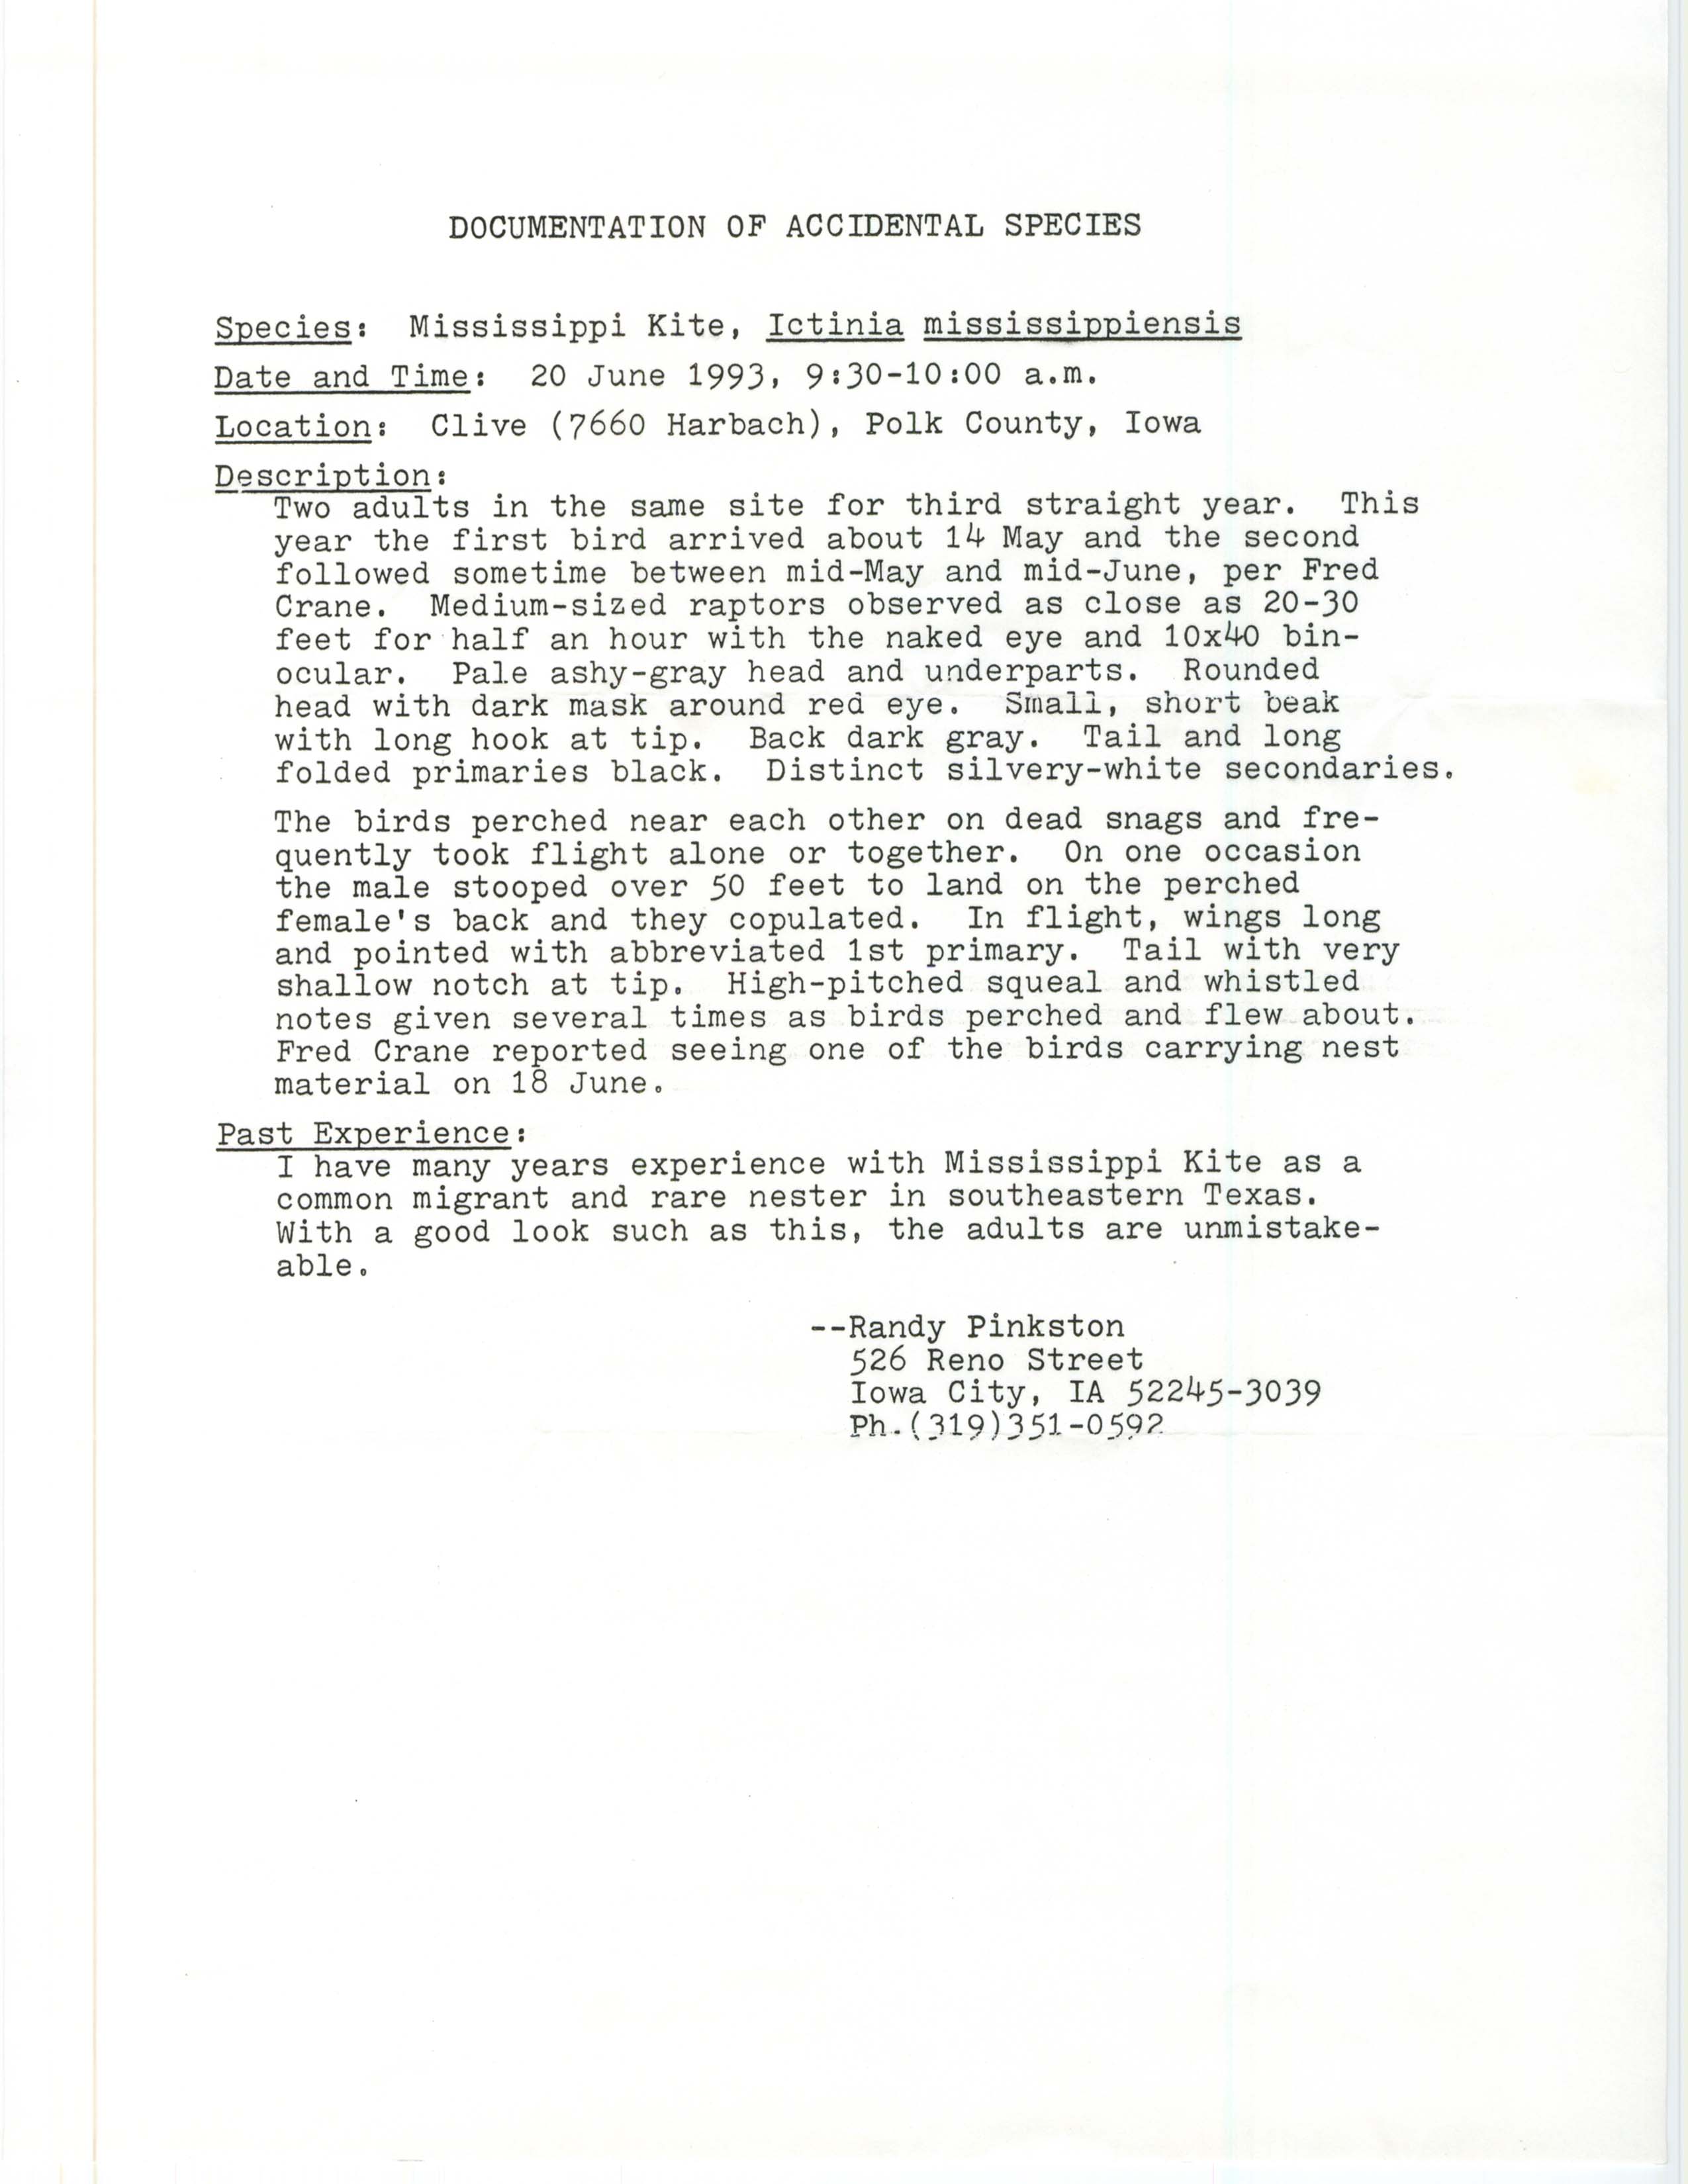 Rare bird documentation form for Mississippi Kite at Clive, 1993